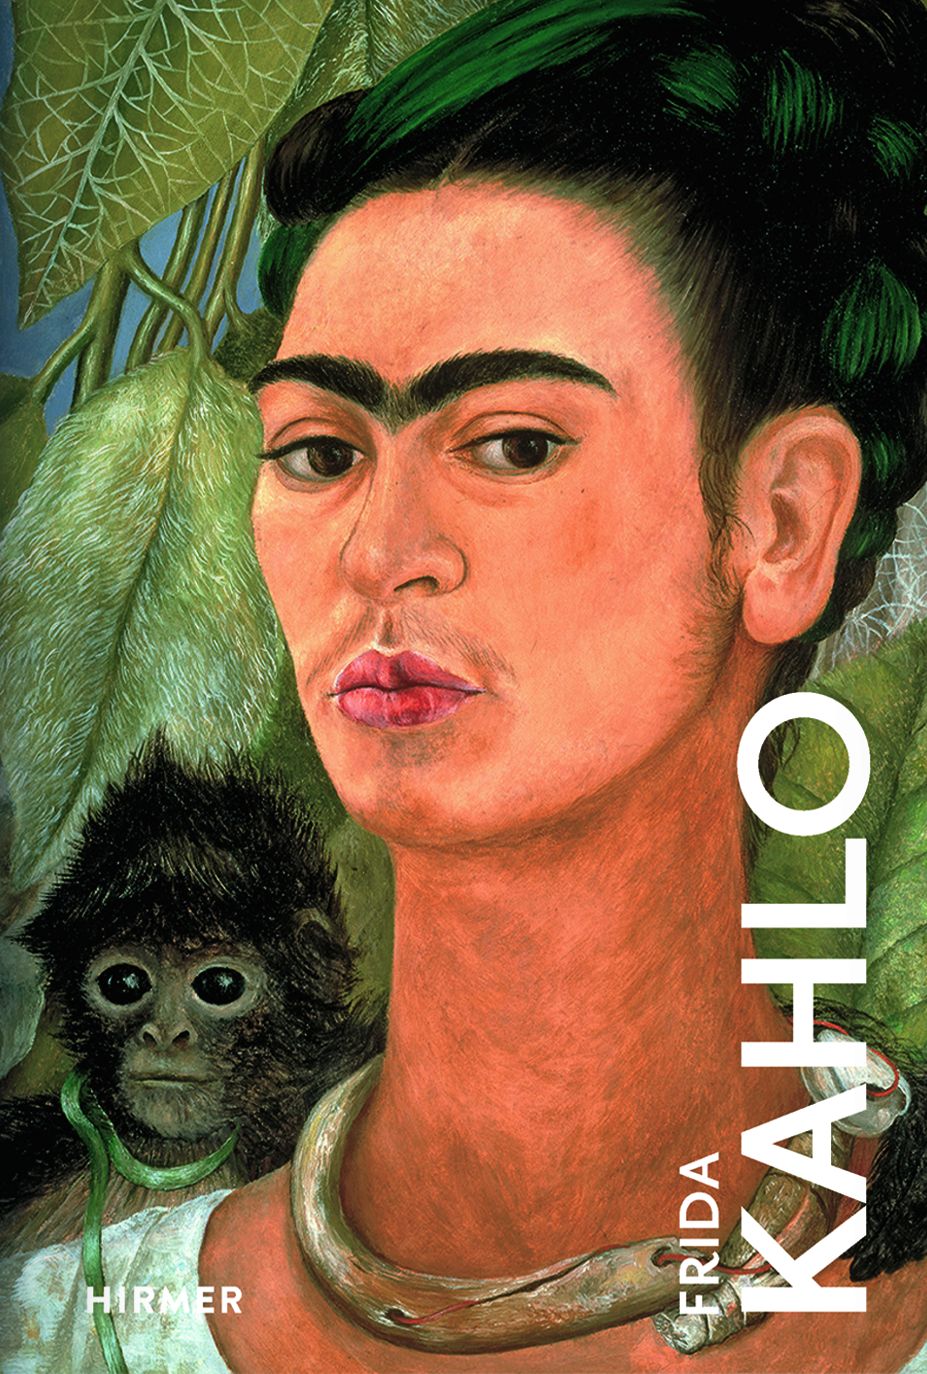 Excerpt: Frida Kahlo, the surrealist Mexican artist